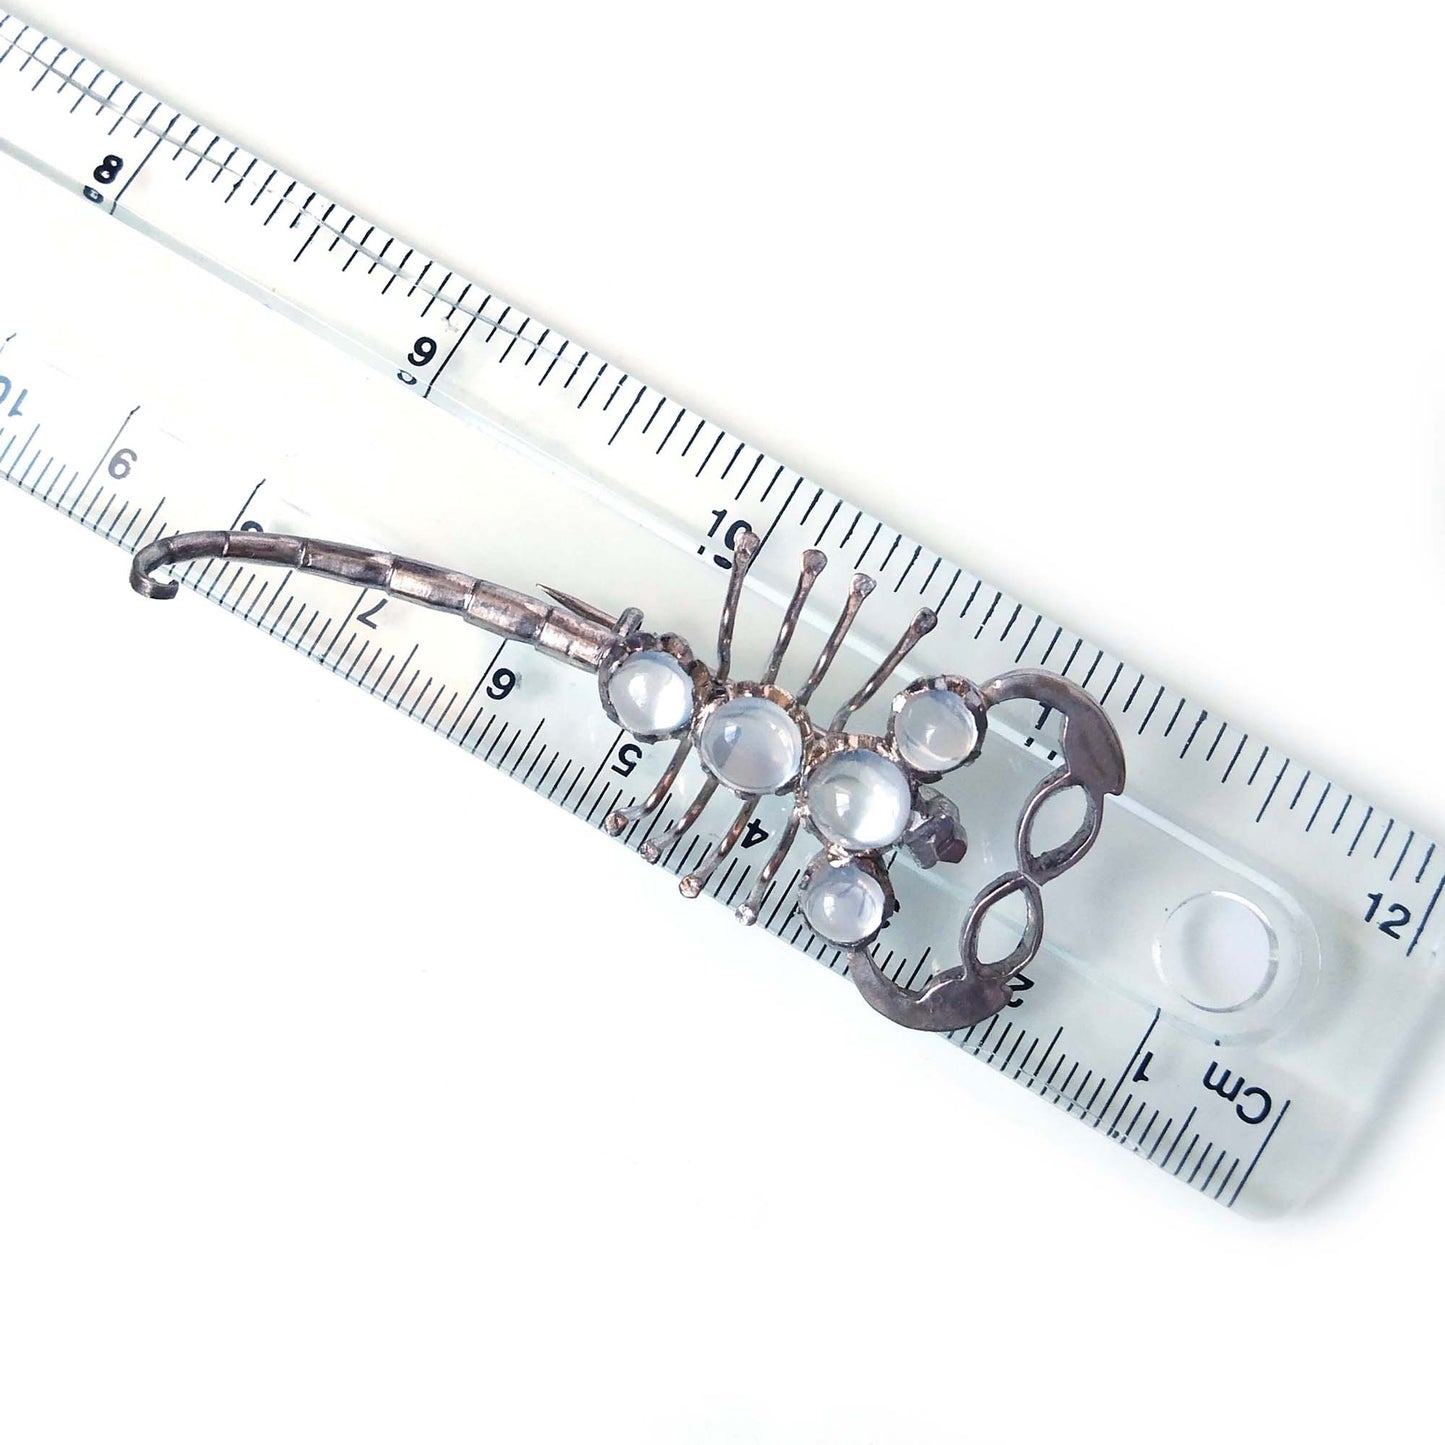 Antique Moonstone Silver Scorpion Brooch, Victorian 1800s Jewelry